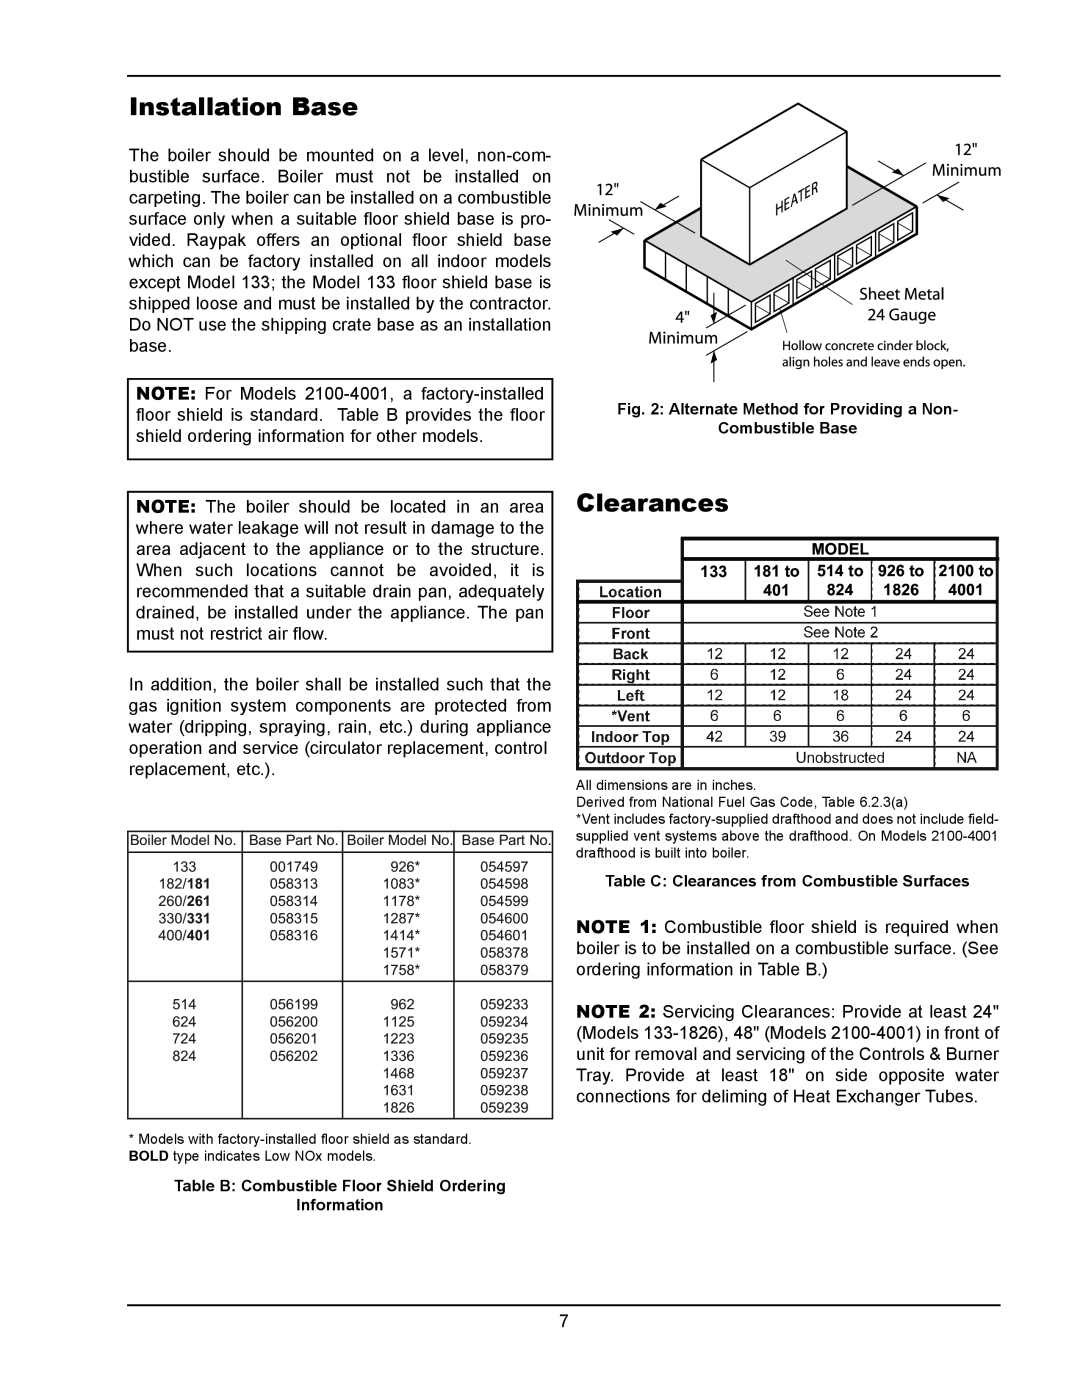 Raypak 133-4001 manual Installation Base, Clearances 